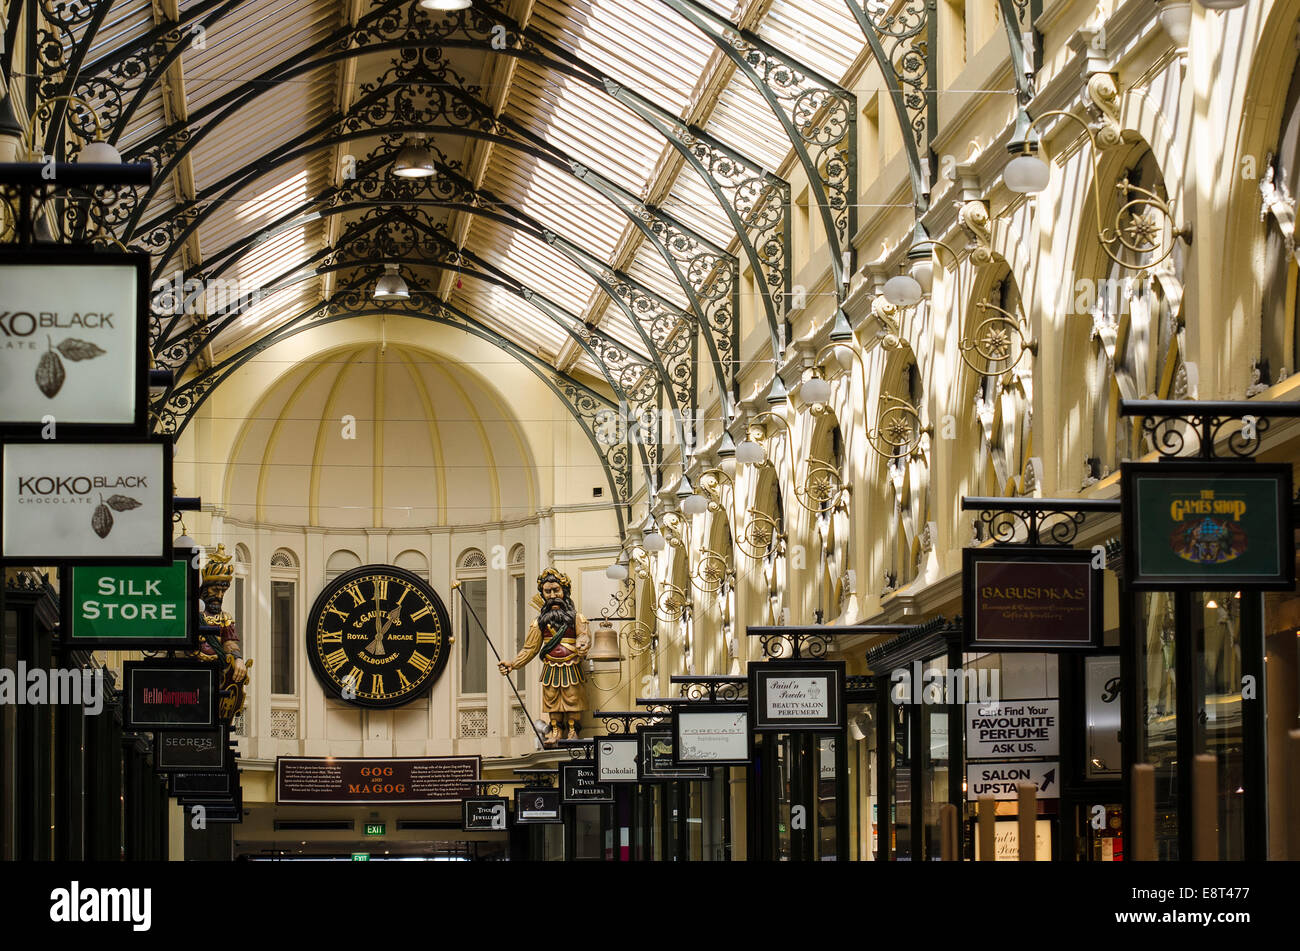 The ornate Royal Arcade in downtown Melbourne Australia. Stock Photo